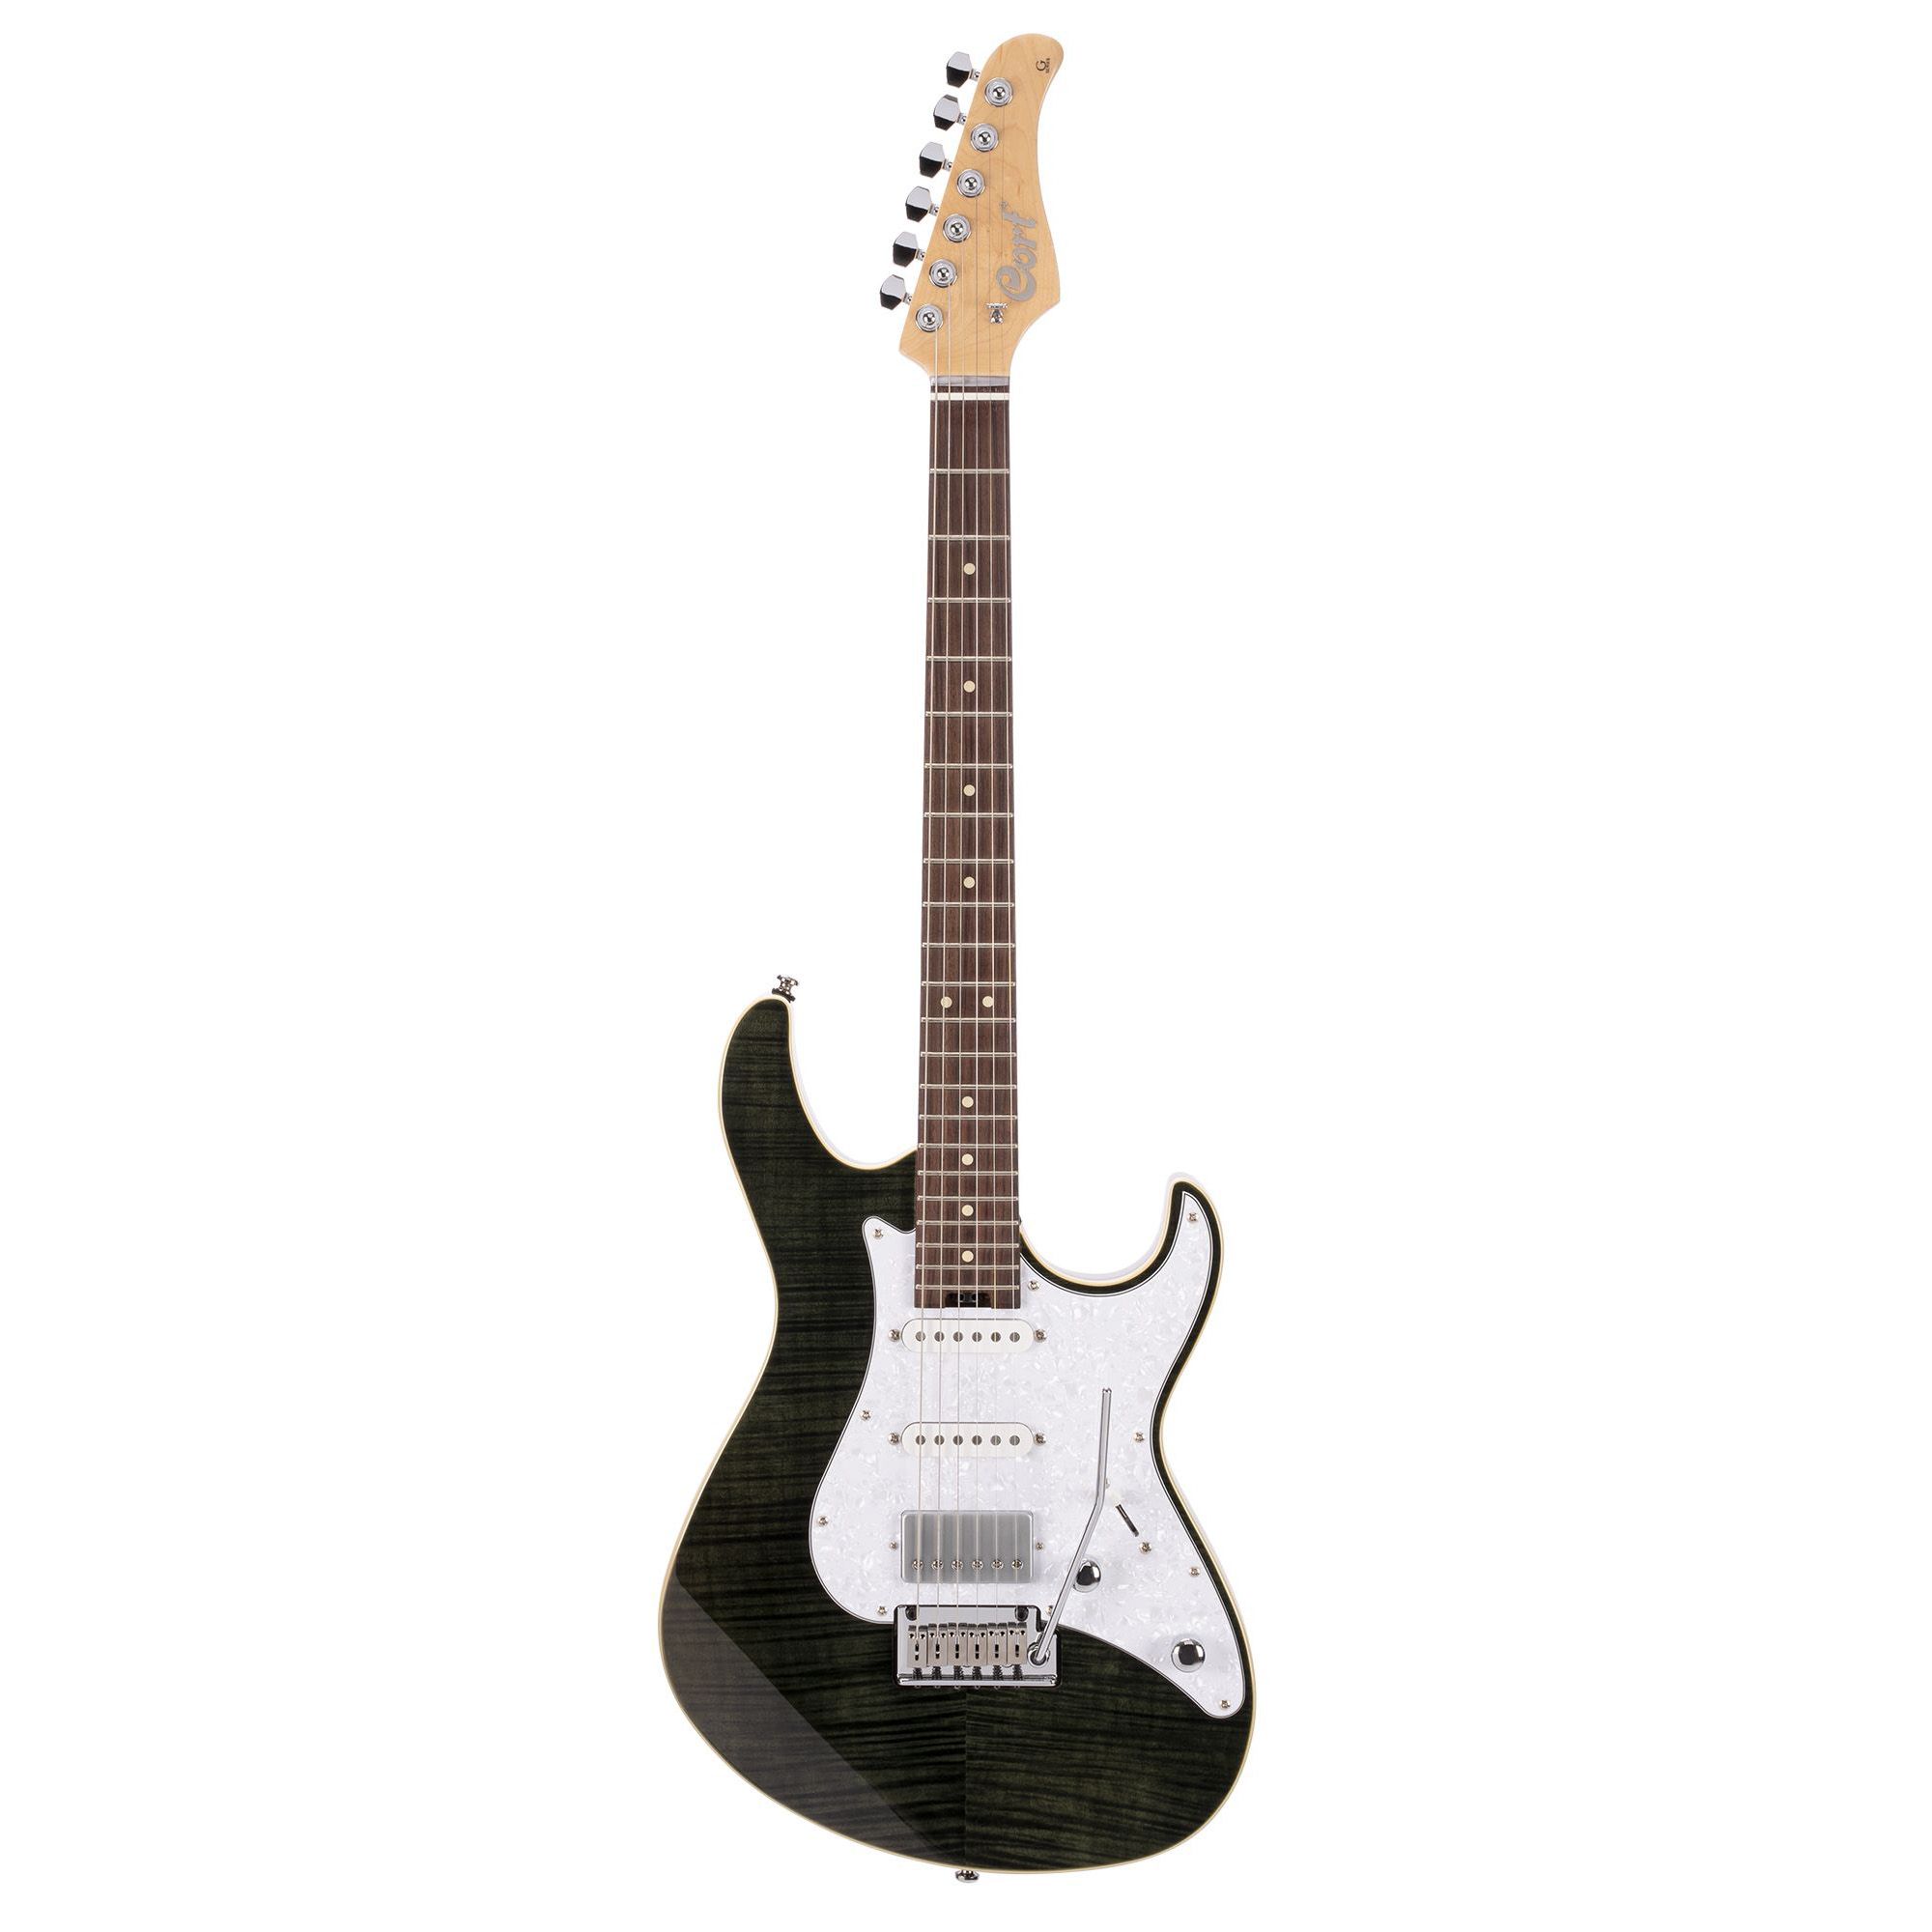 3 электрогитары. Cort g280-select-Tbk. Cort g280-select-Tbk g Series. Cort g110. Электрогитара Fender Stratocaster.